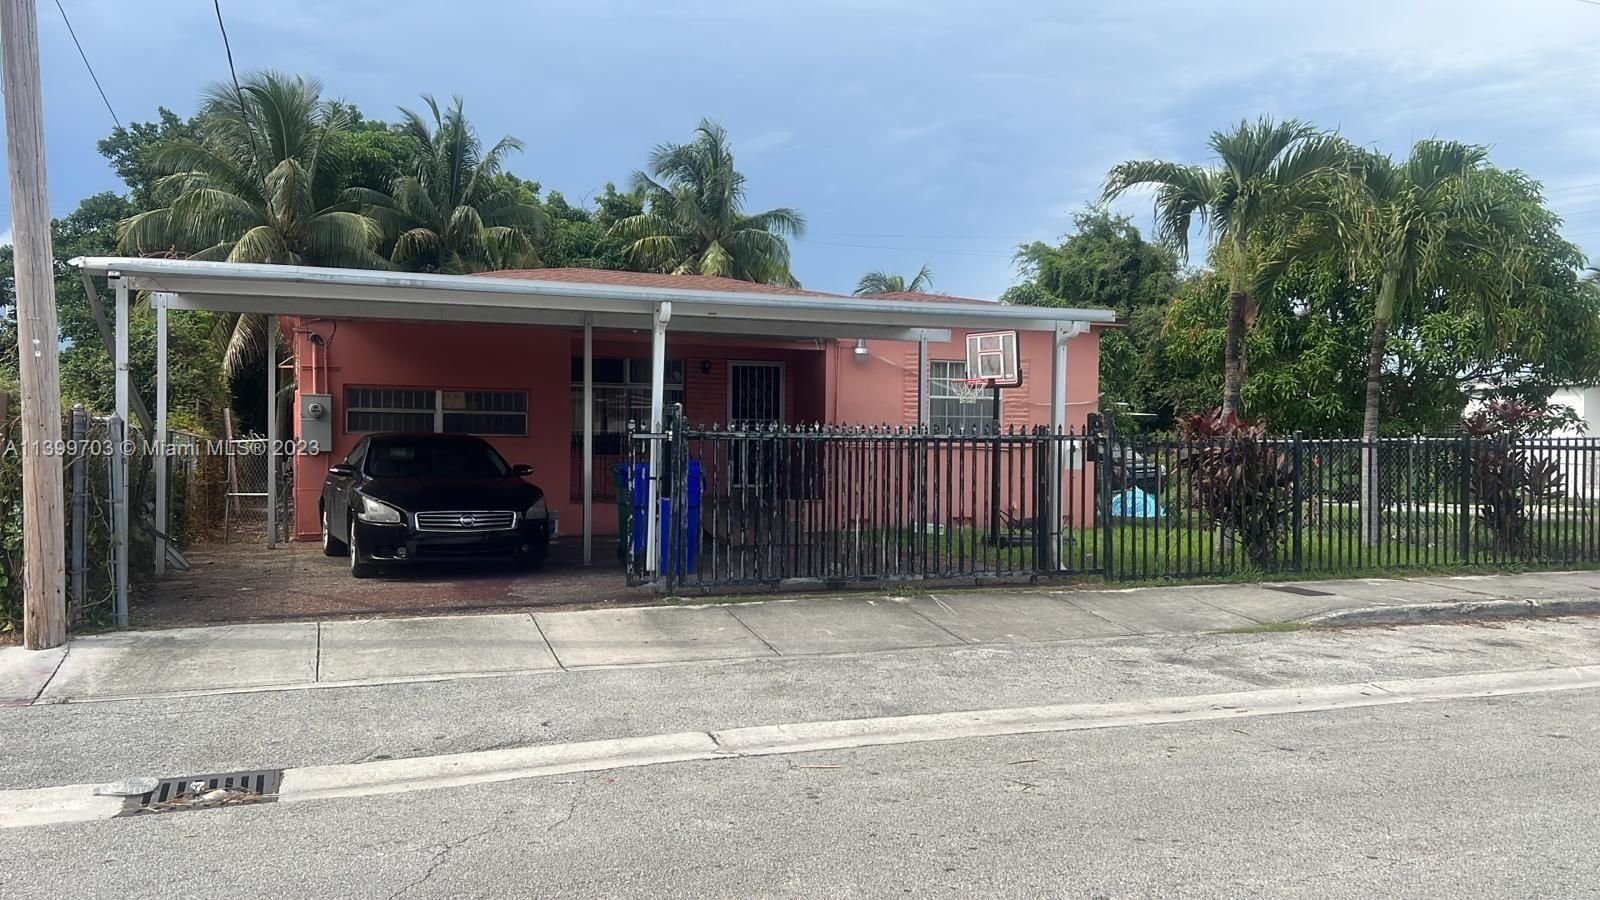 Real estate property located at 121 53 St, Miami-Dade County, Miami, FL